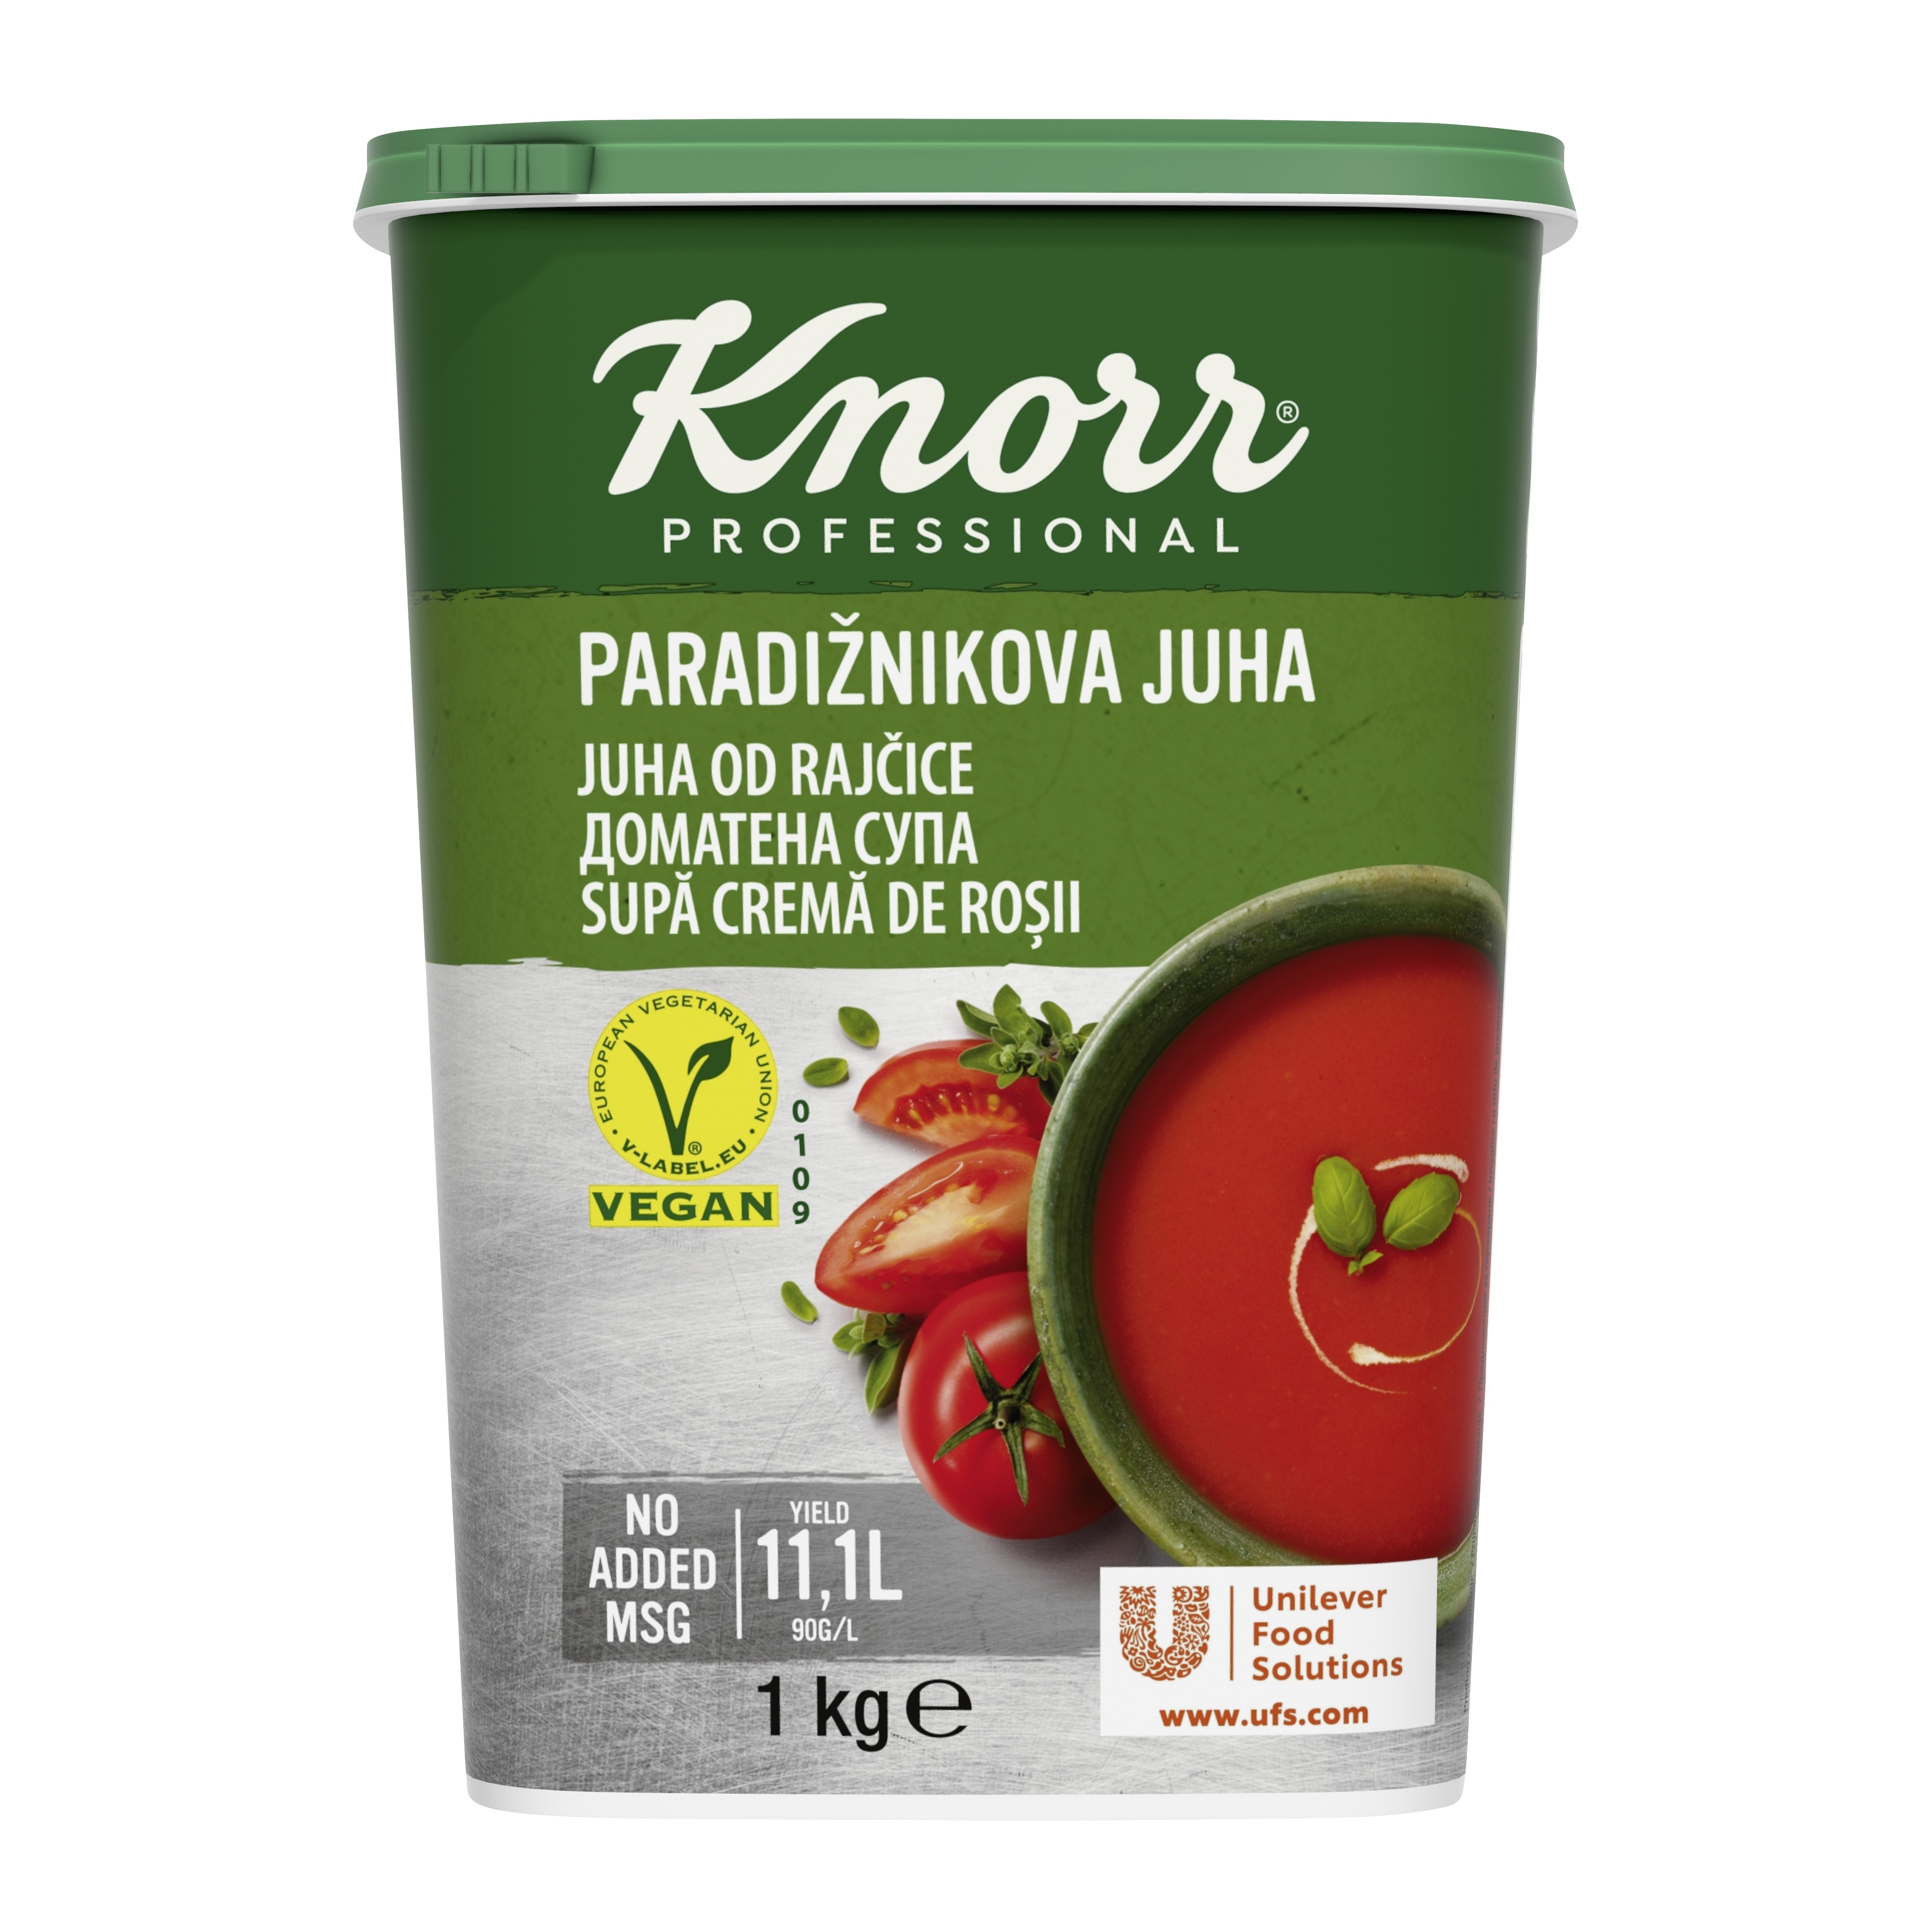 Knorr Paradižnikova juha 1 kg